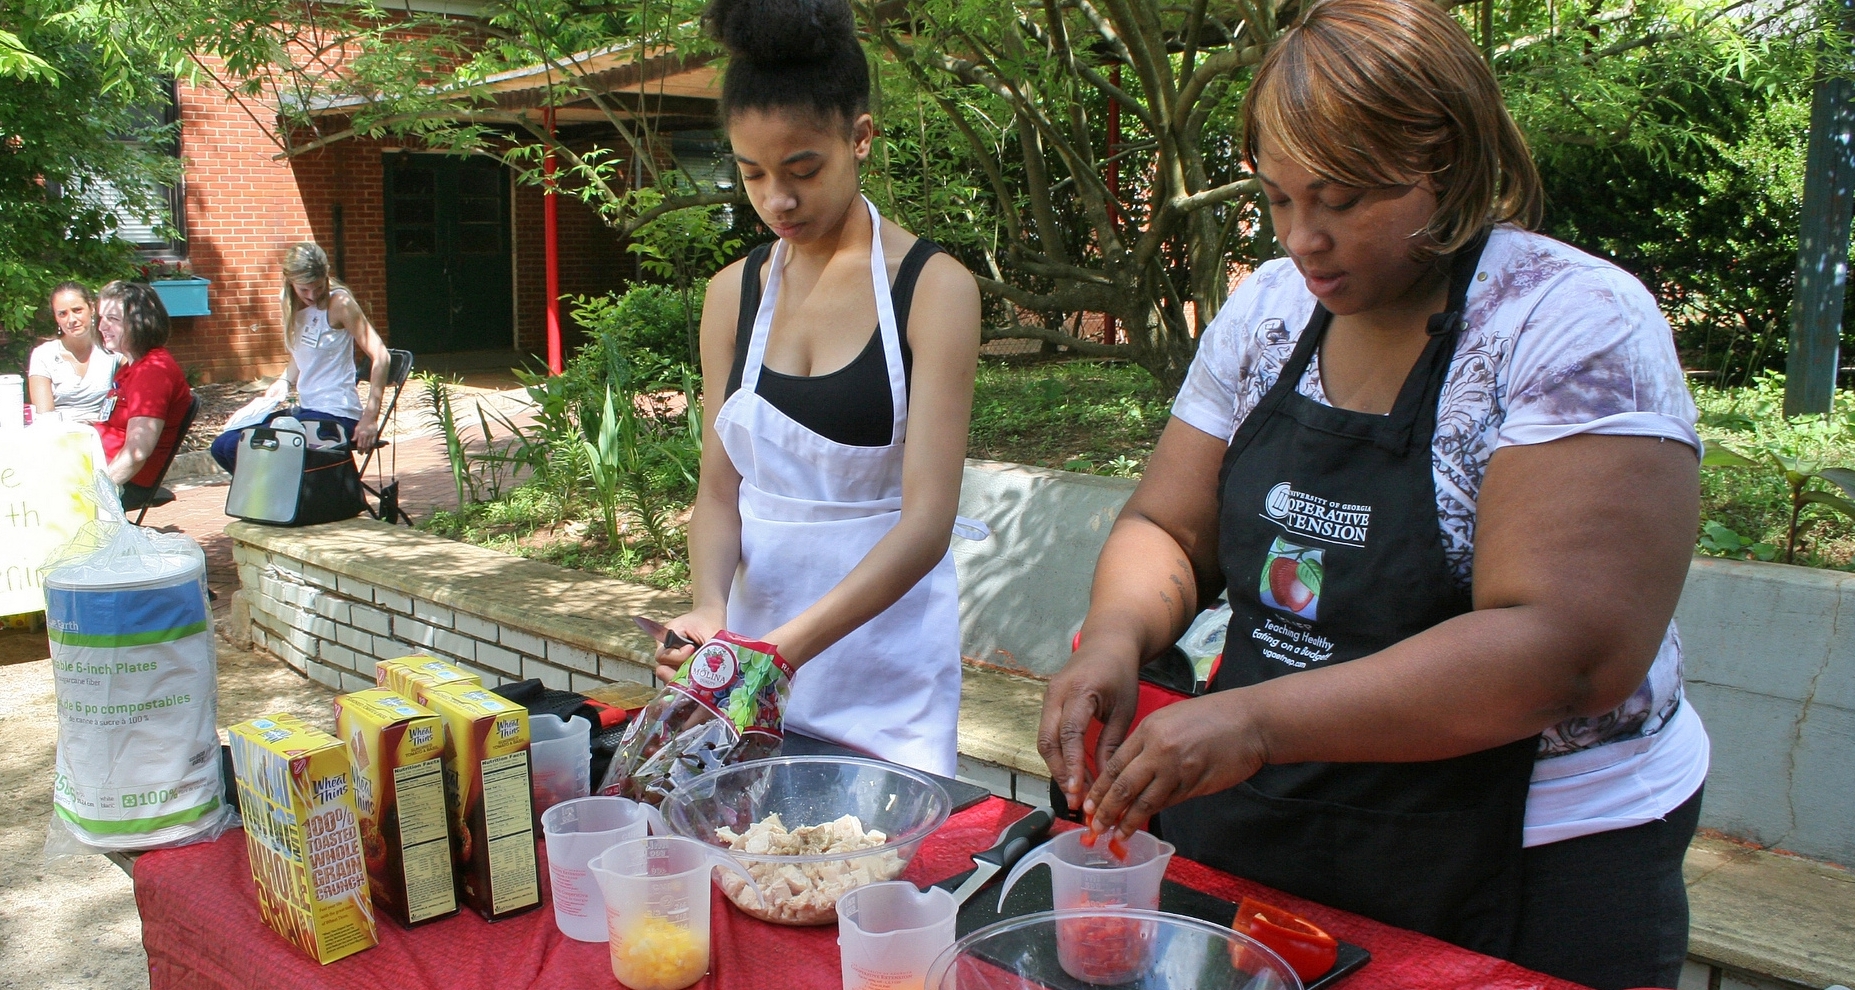 Extension volunteers prepare food at a demonstration